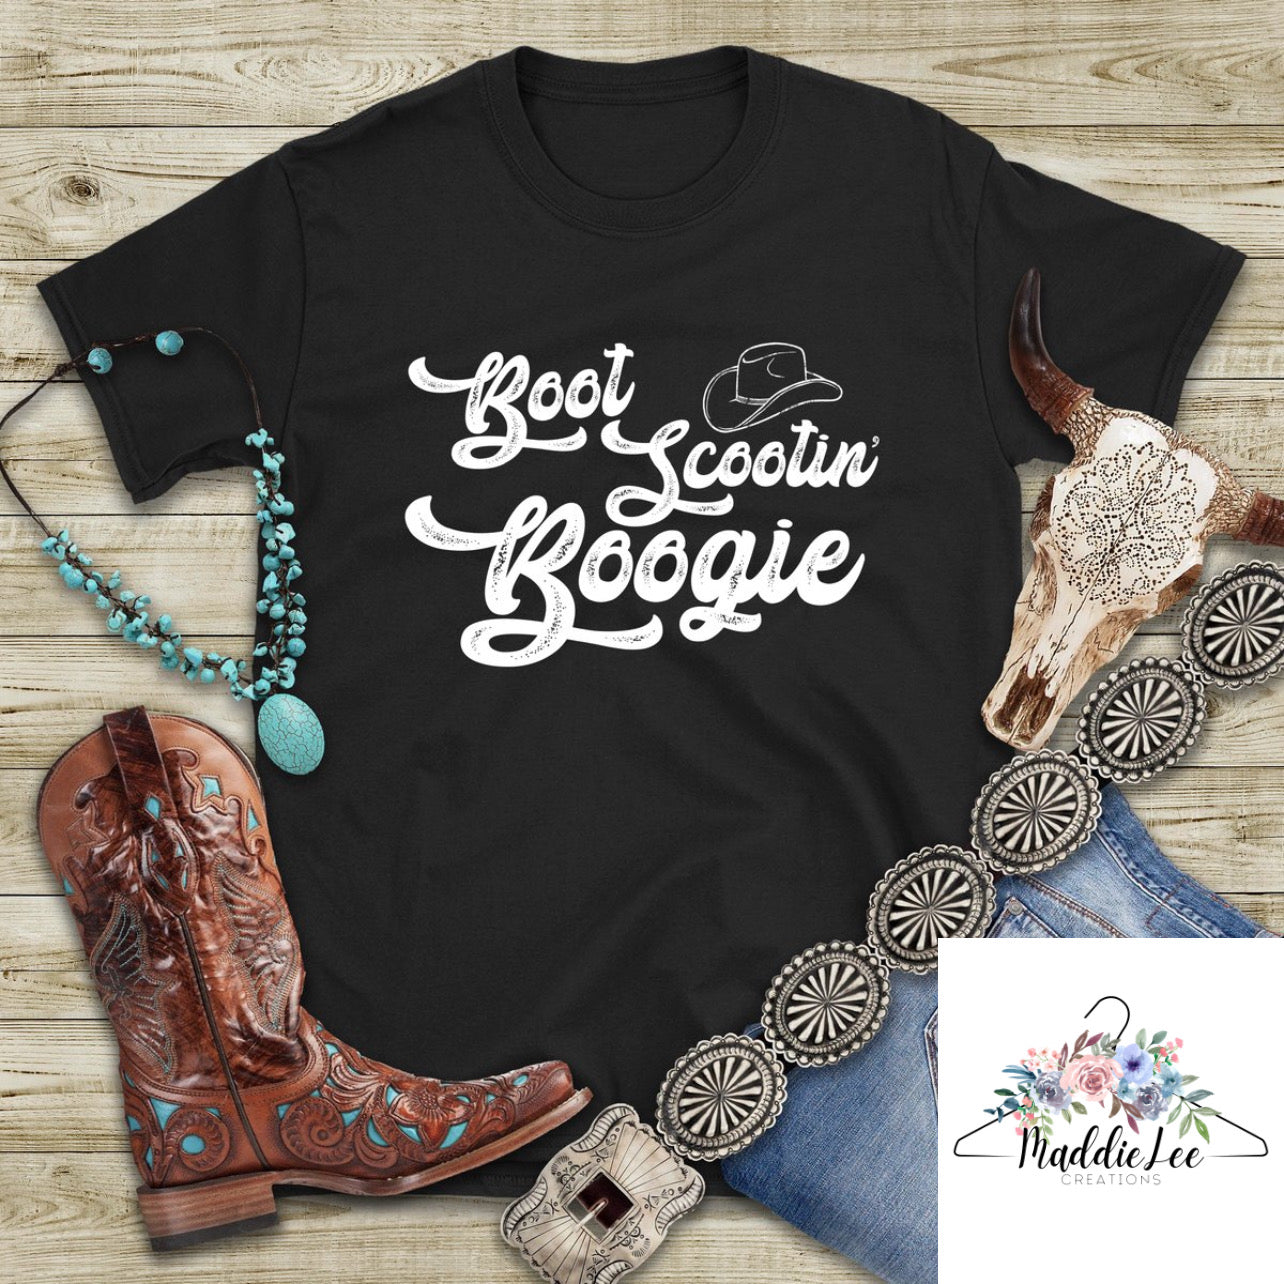 Boot Scootin’ Boogie Black Adult Tee